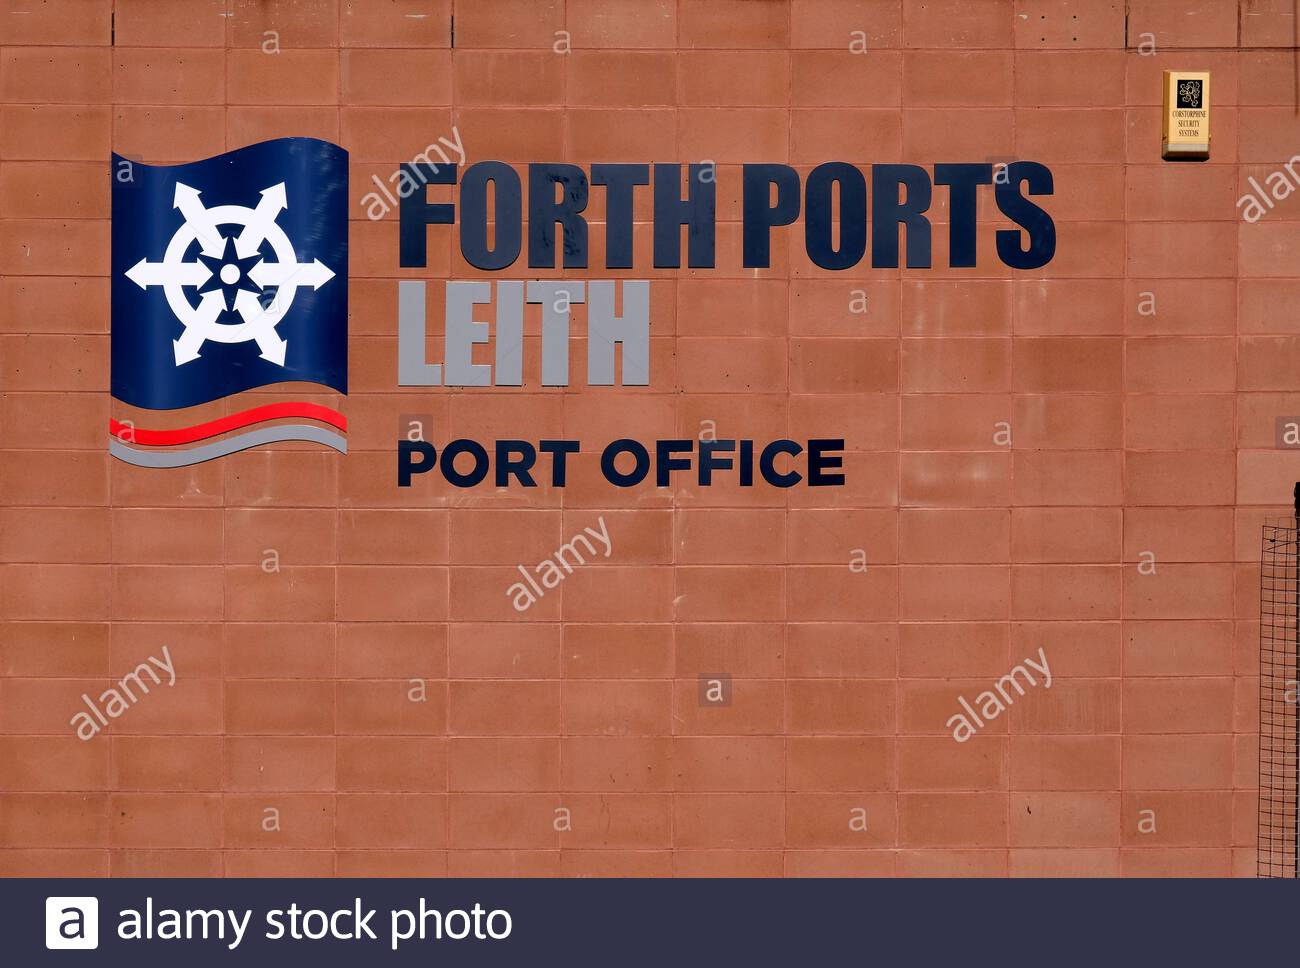 Fort Ports, Leith, Port Office, Leith Edinburgh, Scozia Foto Stock